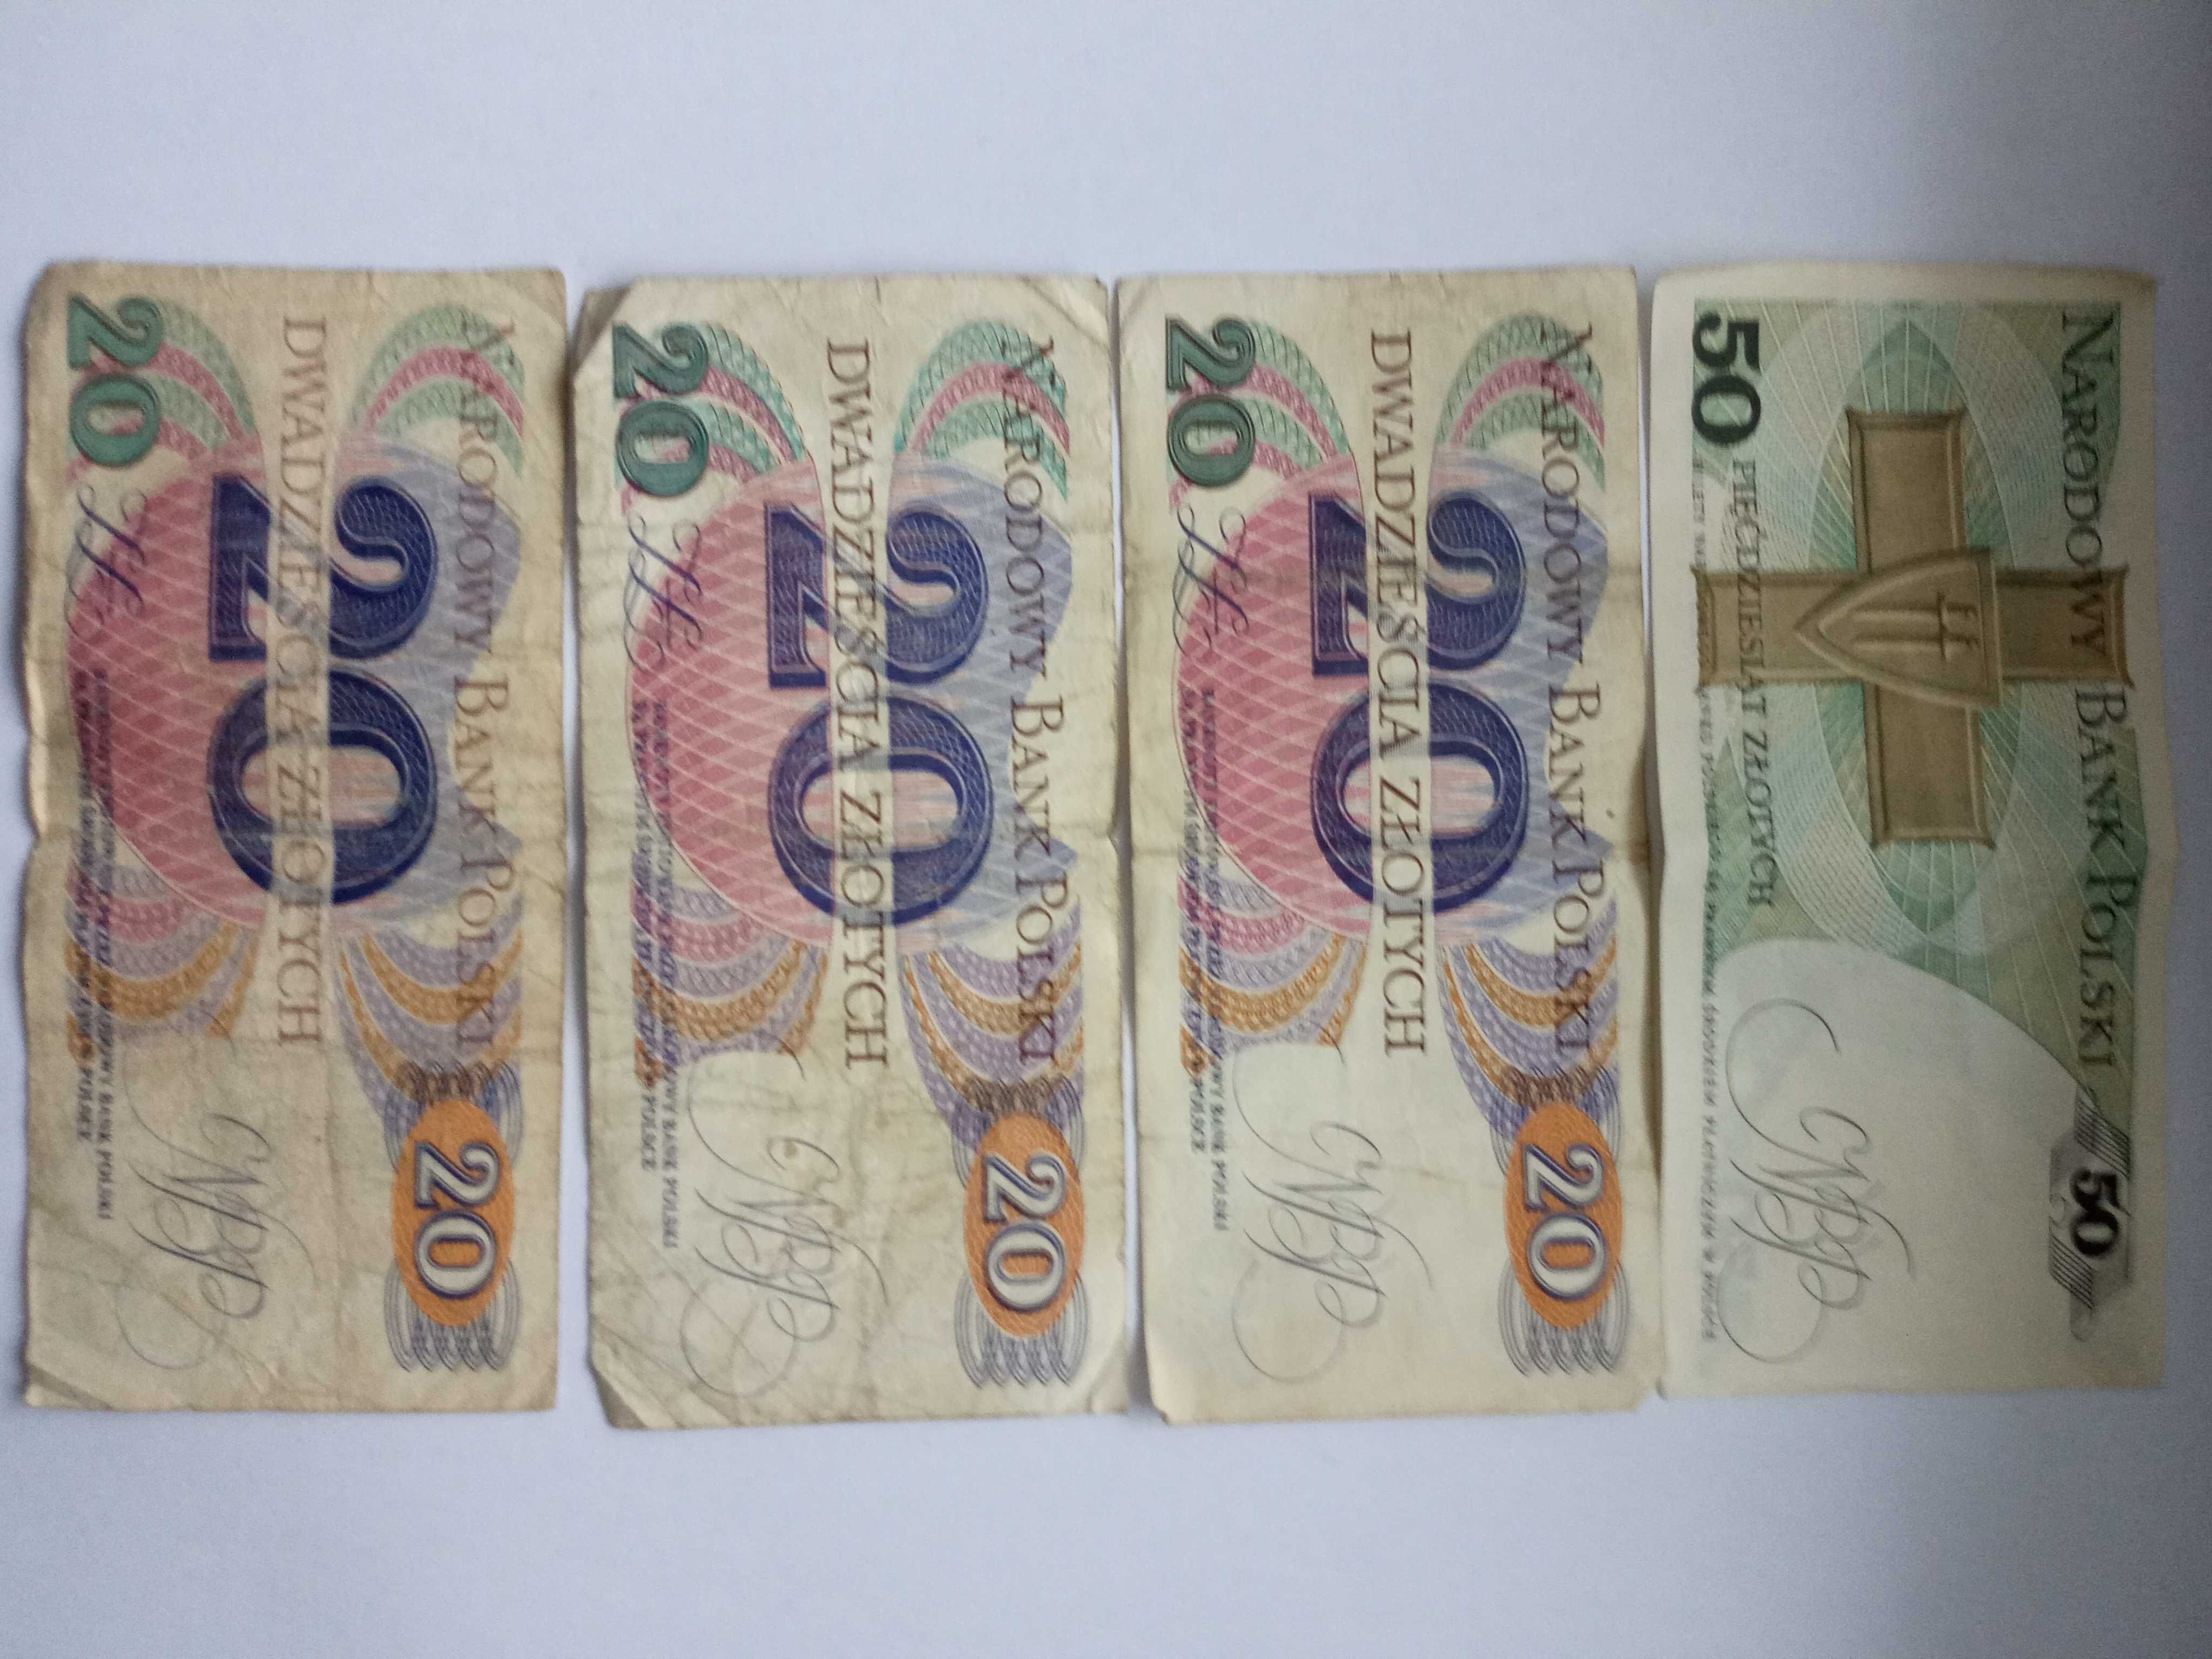 Banknot 50 zł z 1986 roku i 20 zł z 1982 roku.